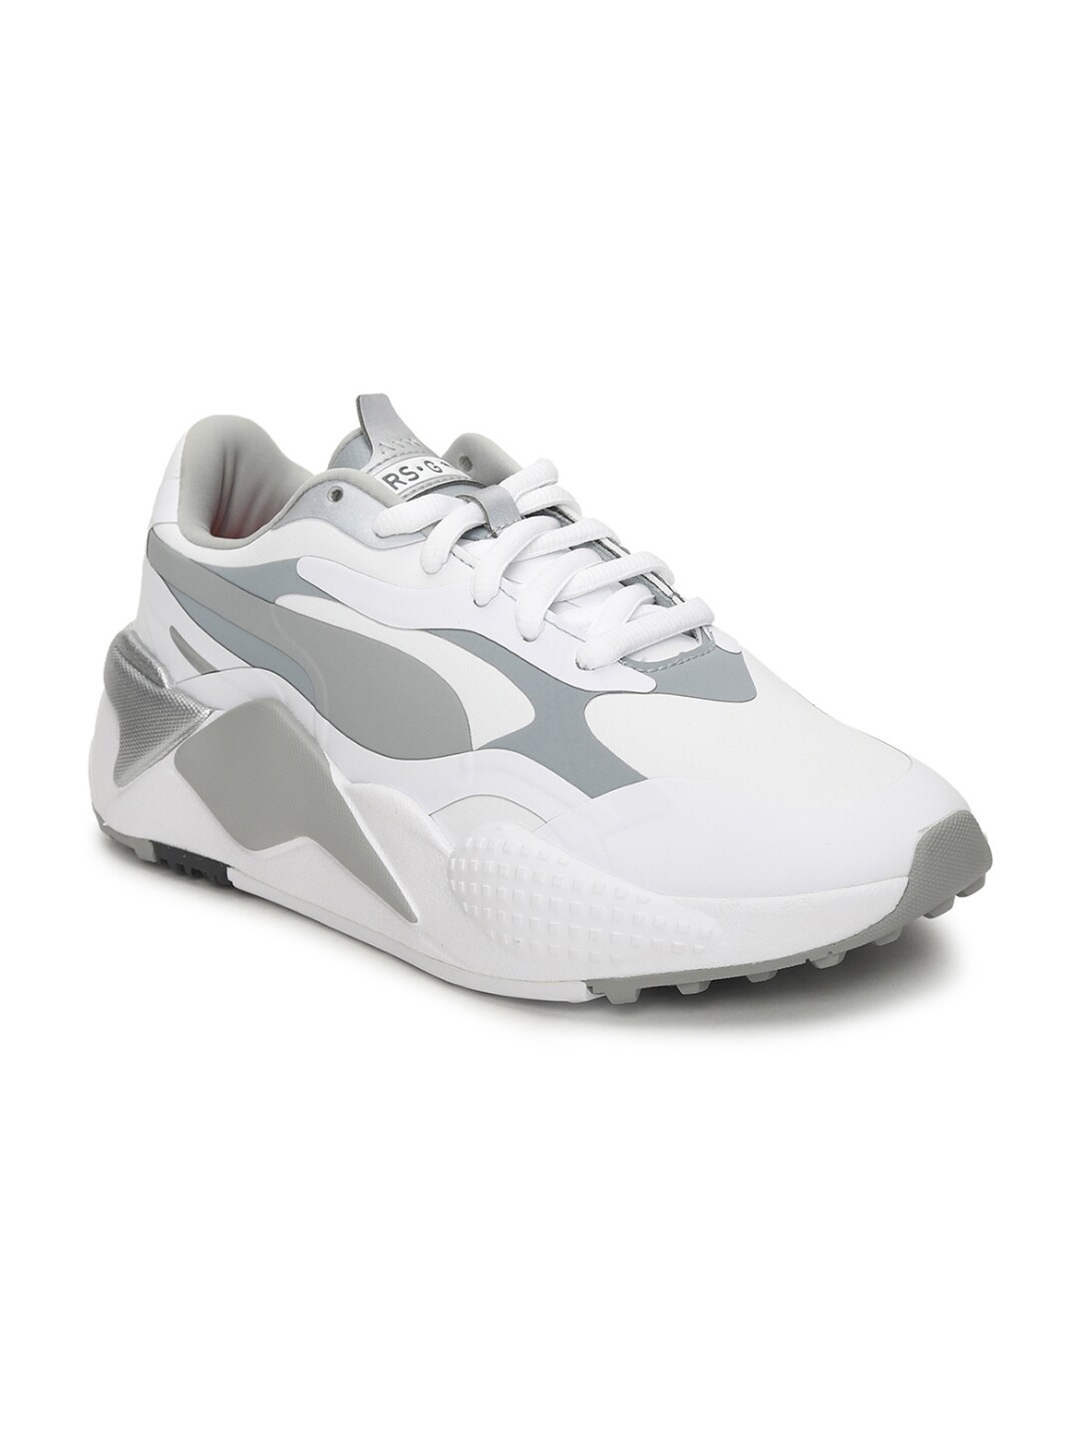 Puma Women White   Grey Colourblocked Golf Shoes